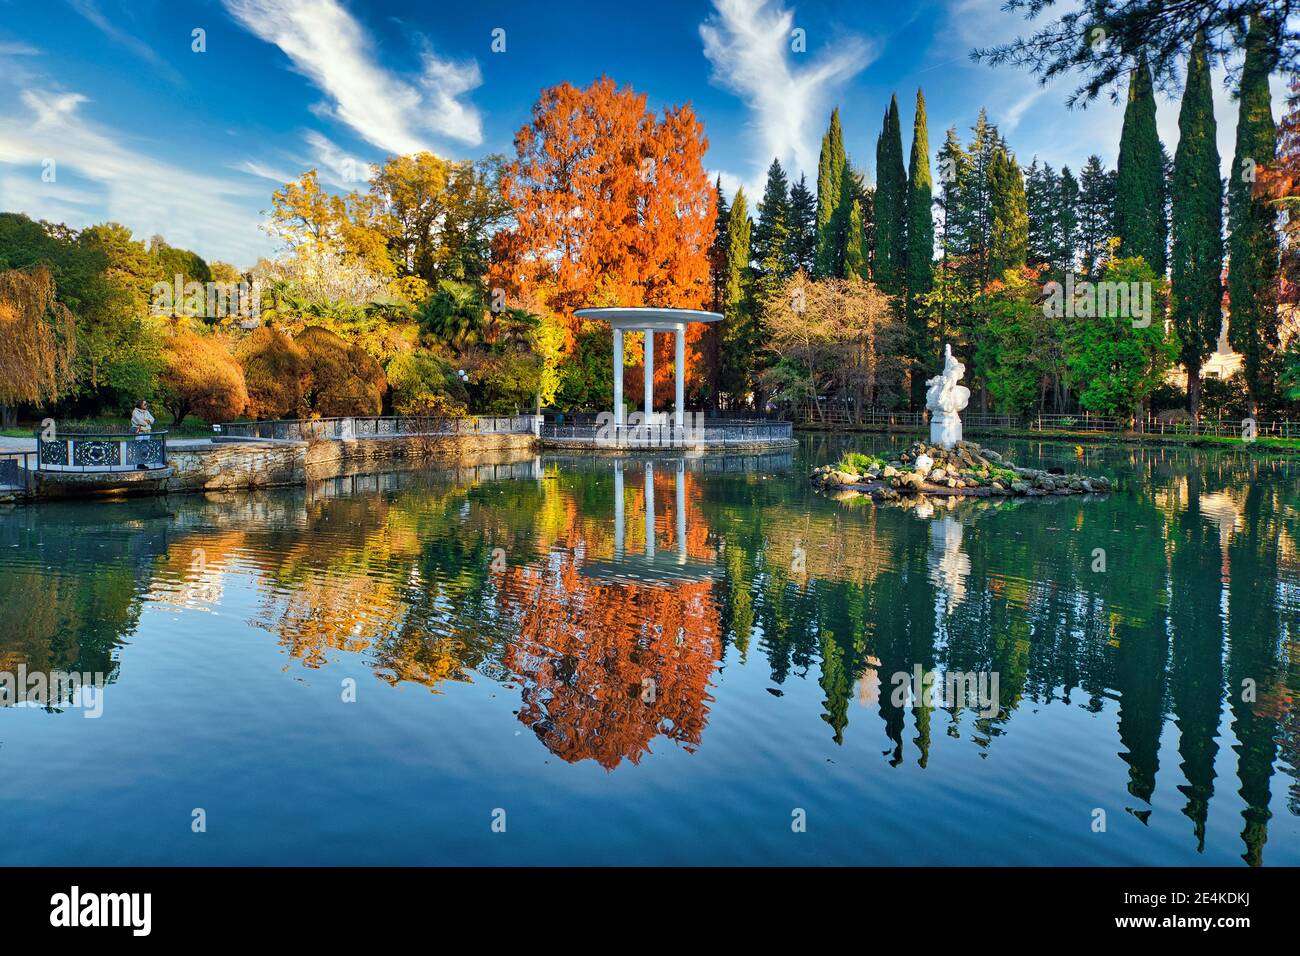 Russia, Krasnodar Krai, Sochi, Pond in Dendrarium park during autumn Stock Photo